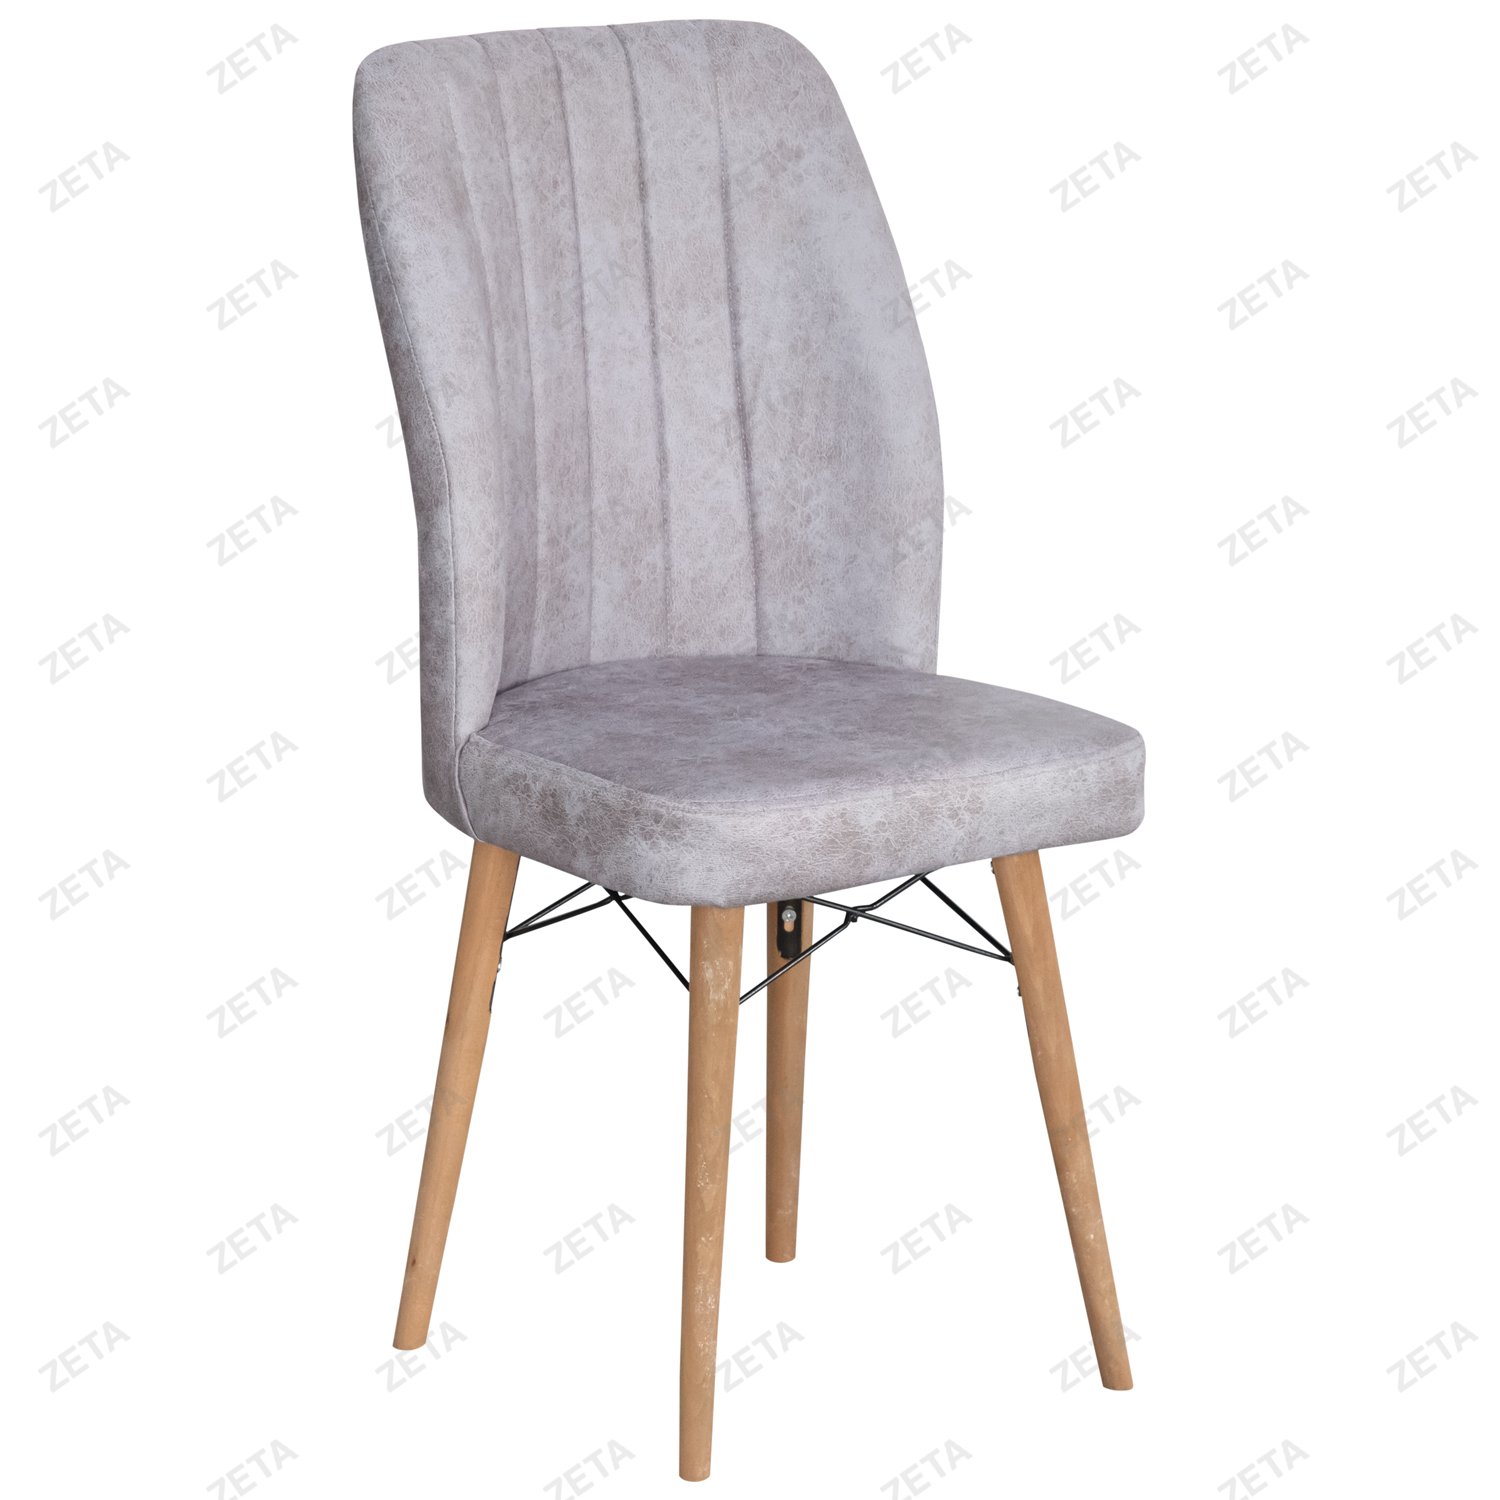 Стул Deko chair (серый) (Ѕ-Турция) - изображение 1